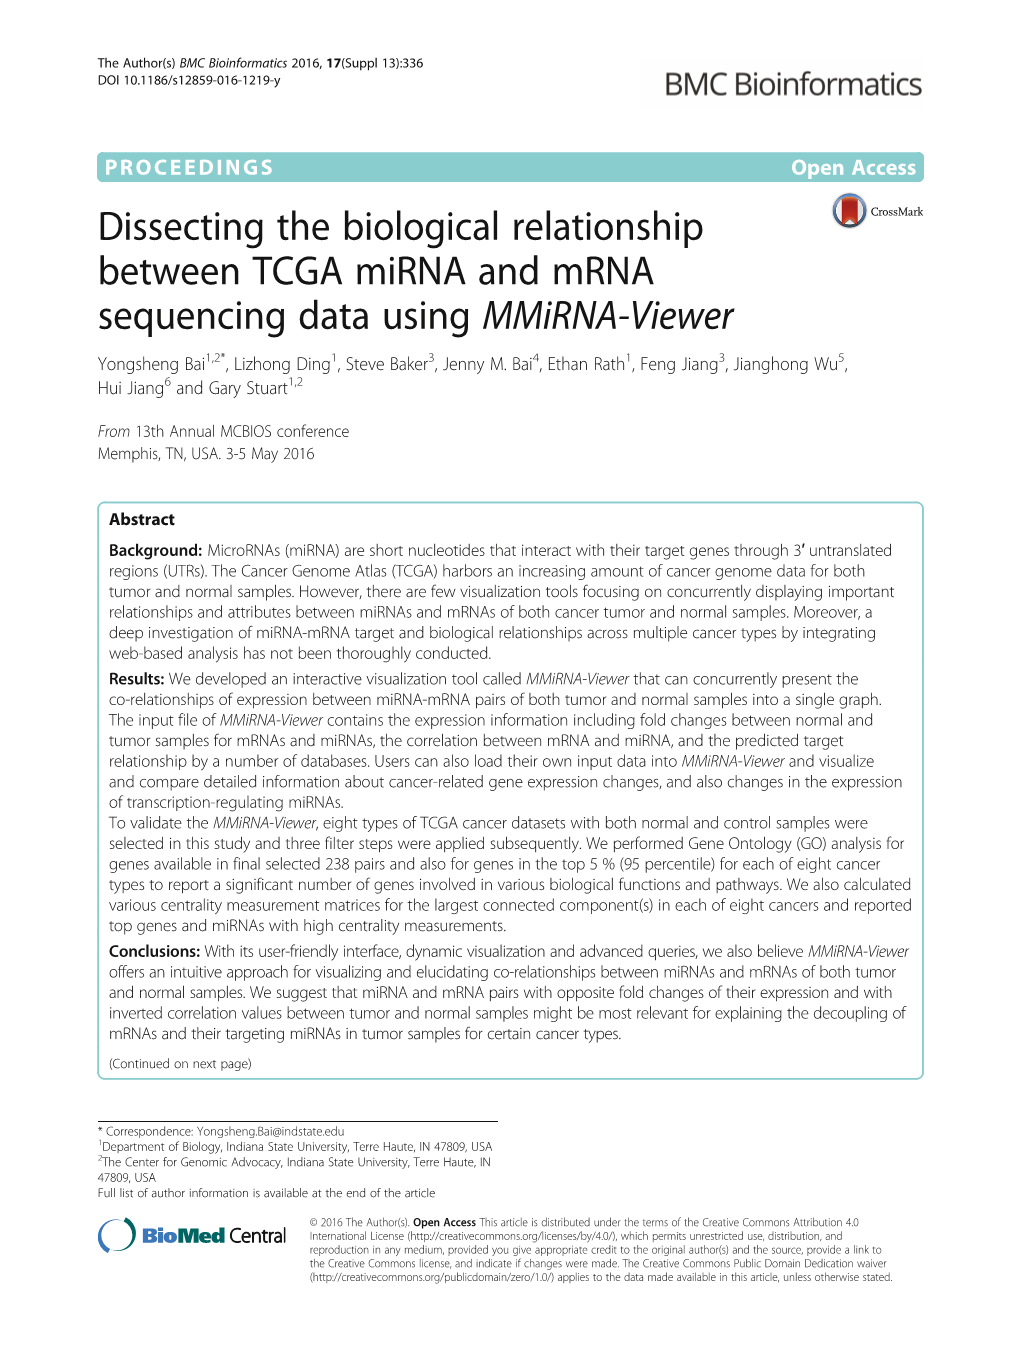 Dissecting the Biological Relationship Between TCGA Mirna and Mrna Sequencing Data Using Mmirna-Viewer Yongsheng Bai1,2*, Lizhong Ding1, Steve Baker3, Jenny M